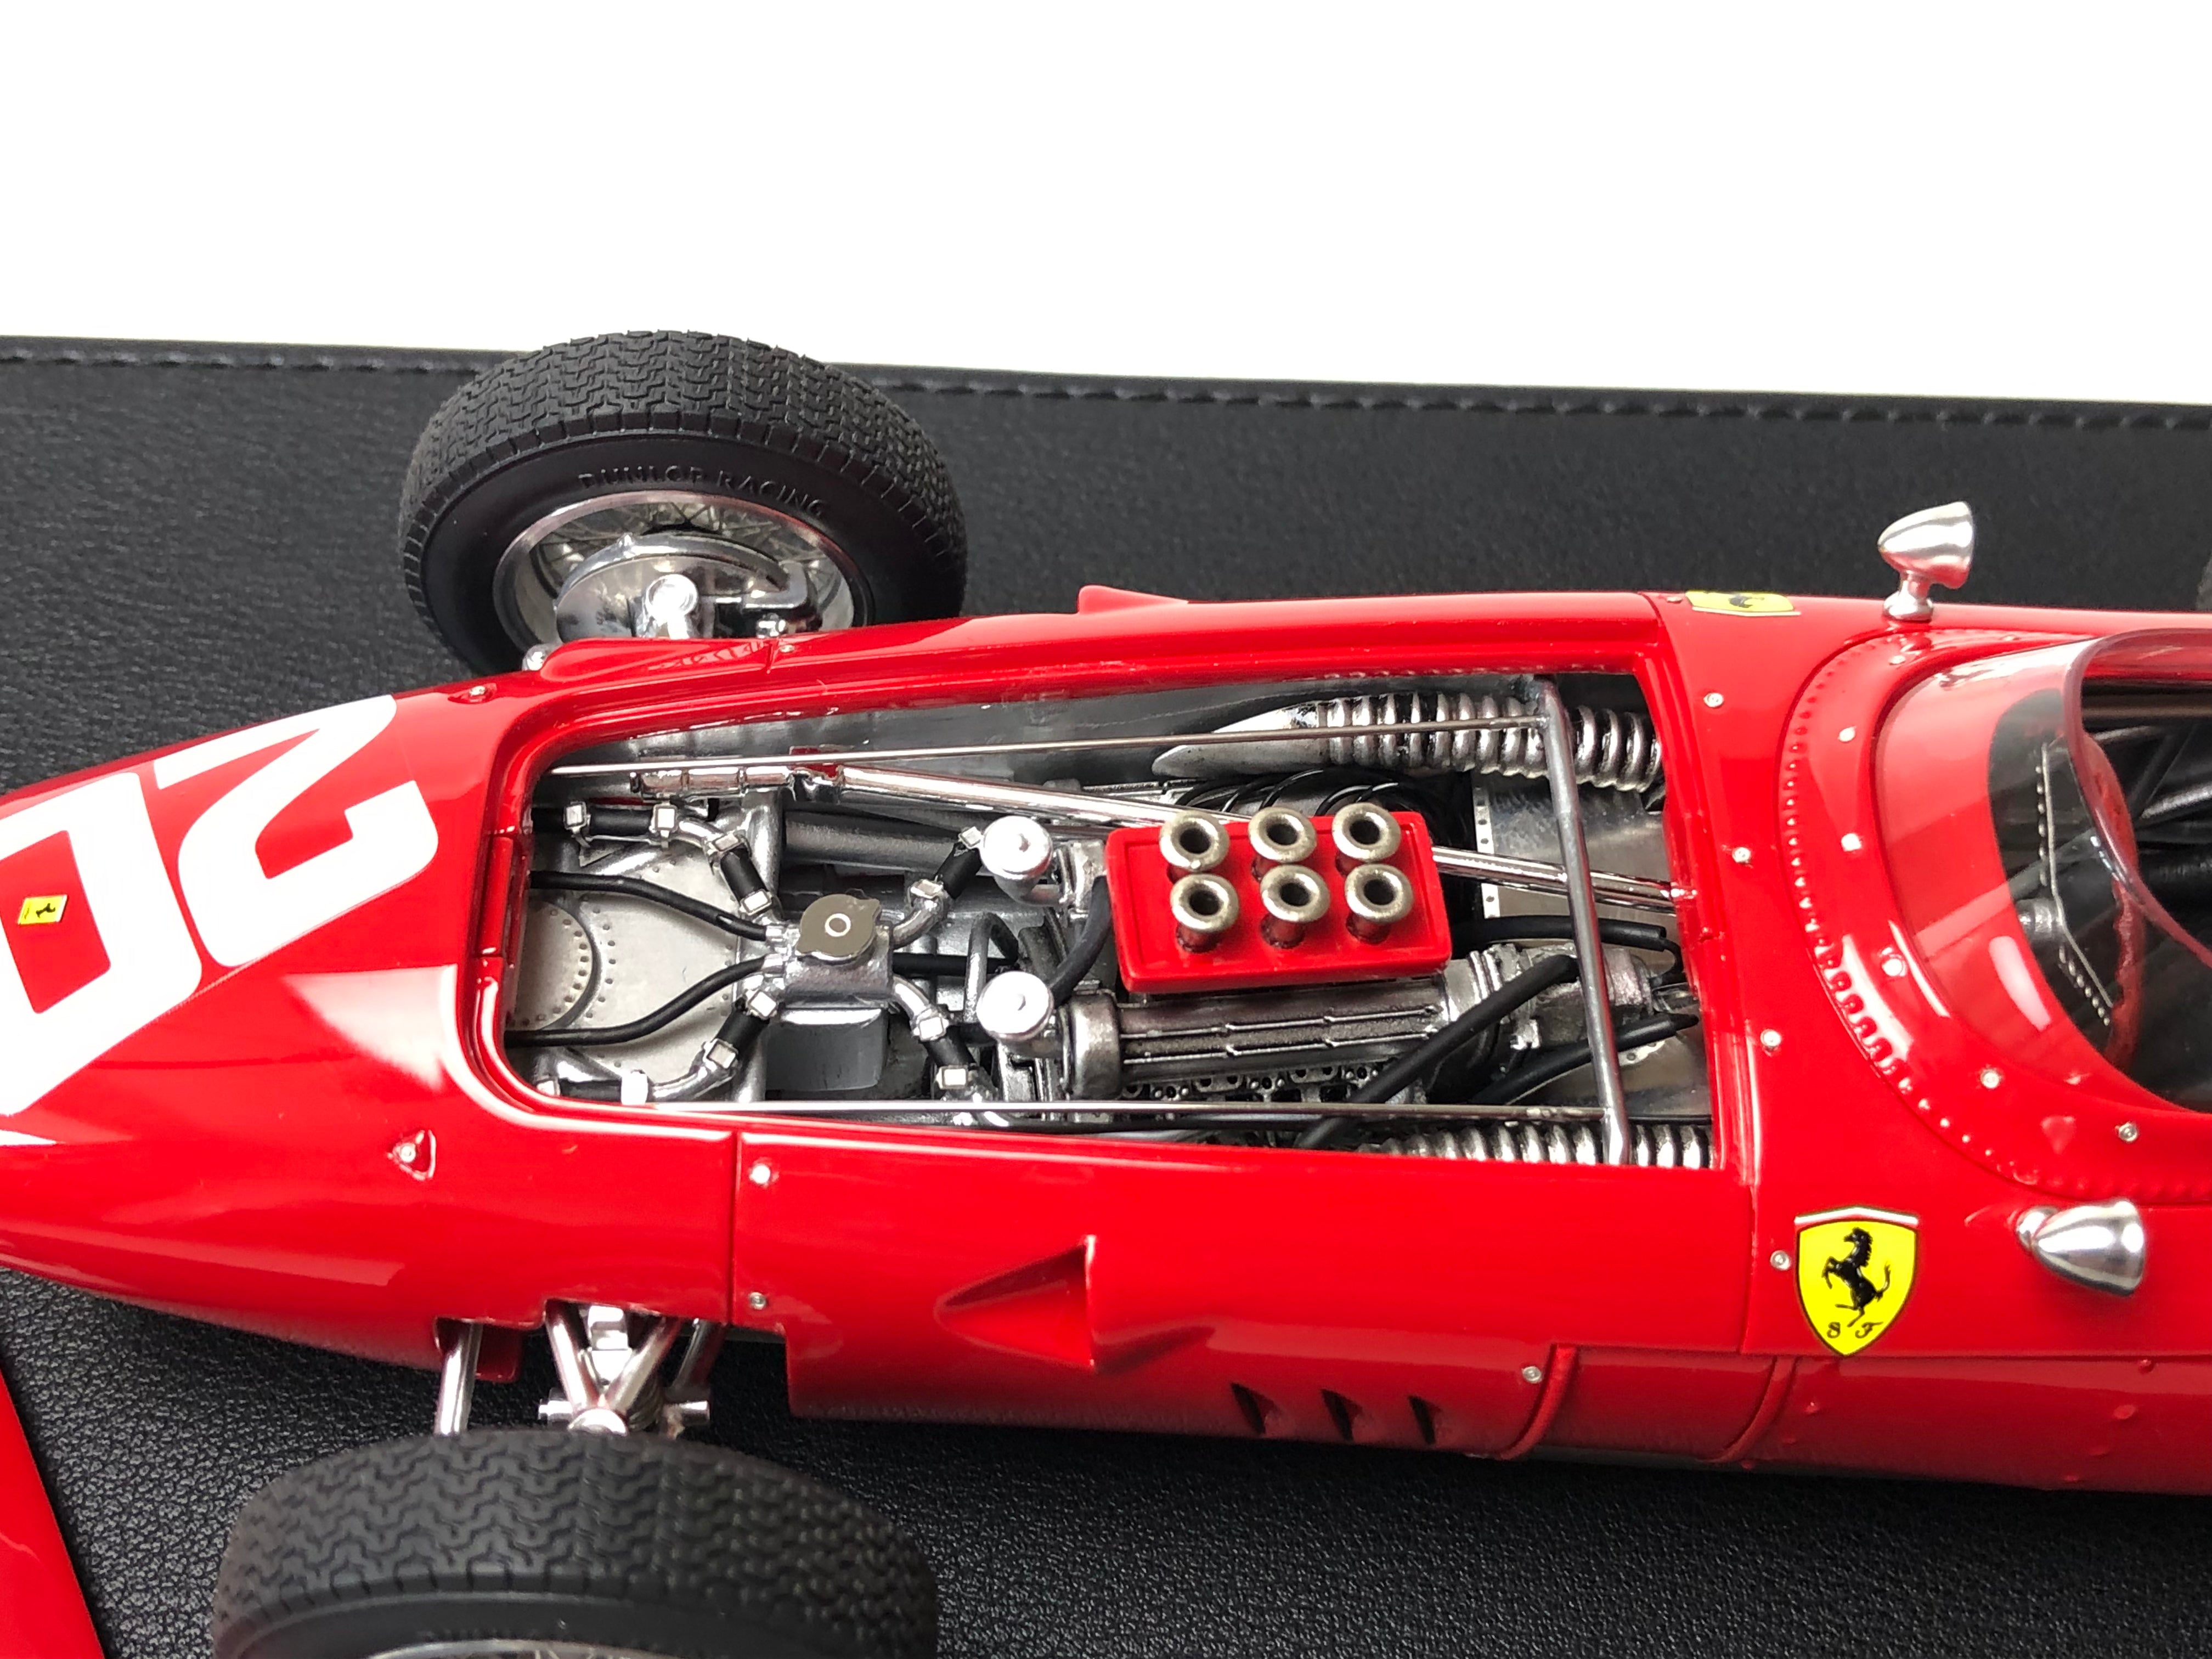 1960 Ferrari 256 F1 #20 Phil Hill, 1:18 scale